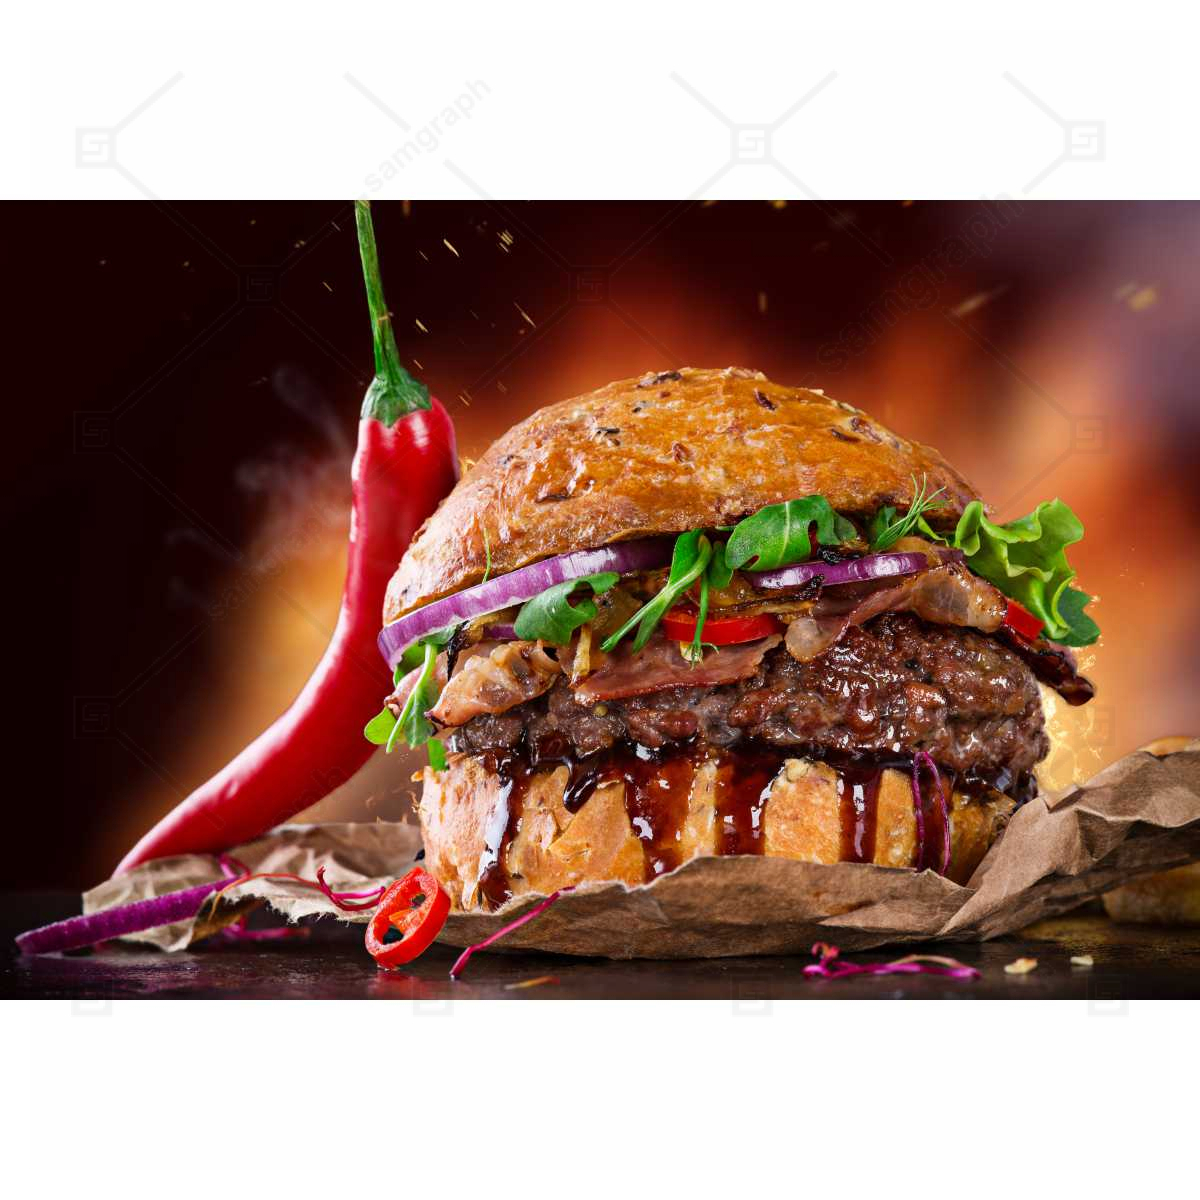 High quality photo of juicy hamburger with fire and pepper lettuce onion parsley 1 تصویر با کیفیت ساندویچ ژامبون با پنیر کاهو گوجه فرنگی پیزا مرتادلا سوسیس